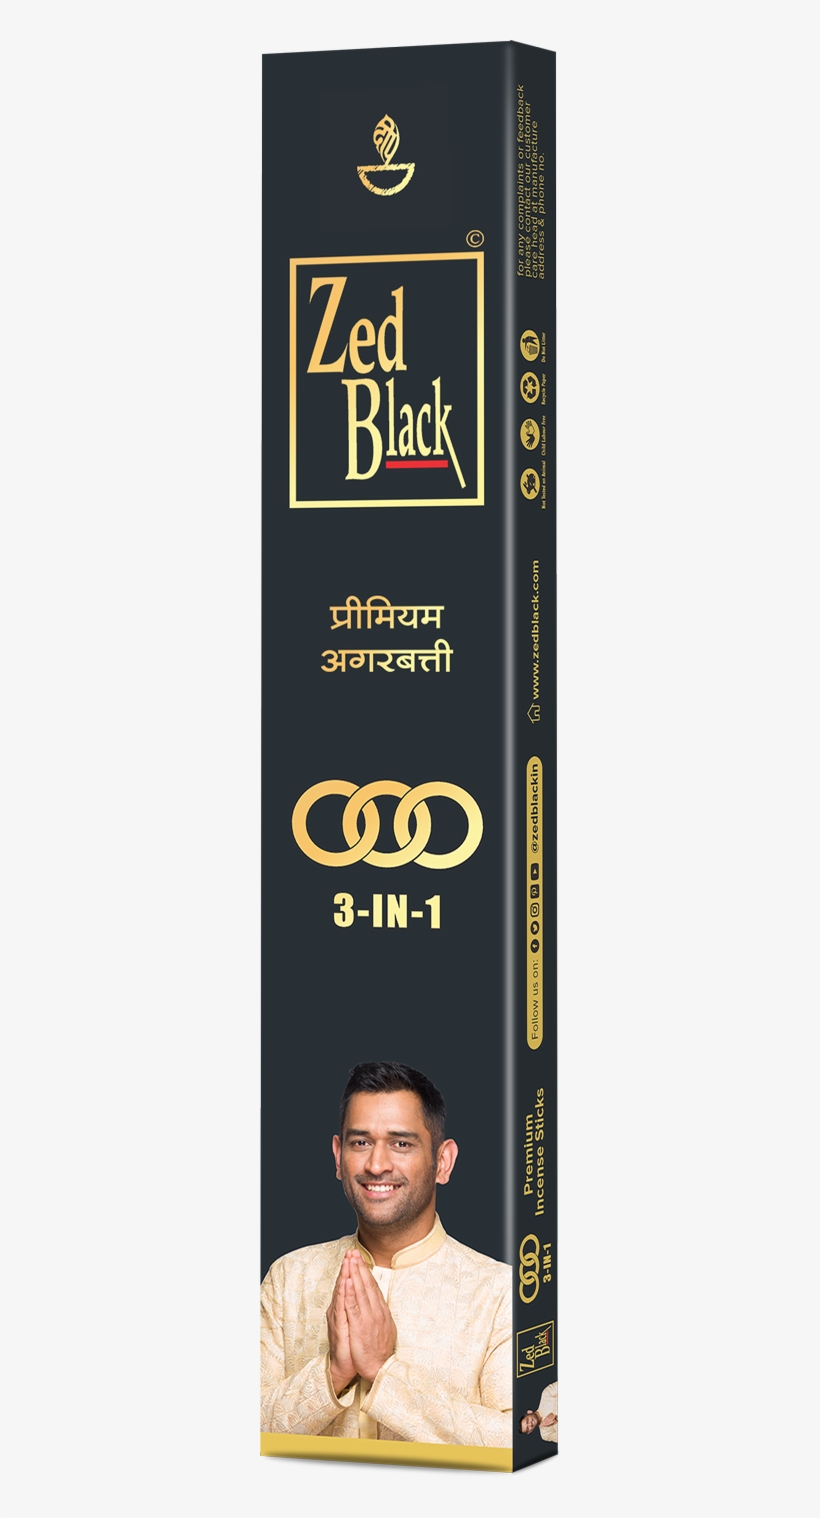 Agar - Incense Of India, transparent png #8455367